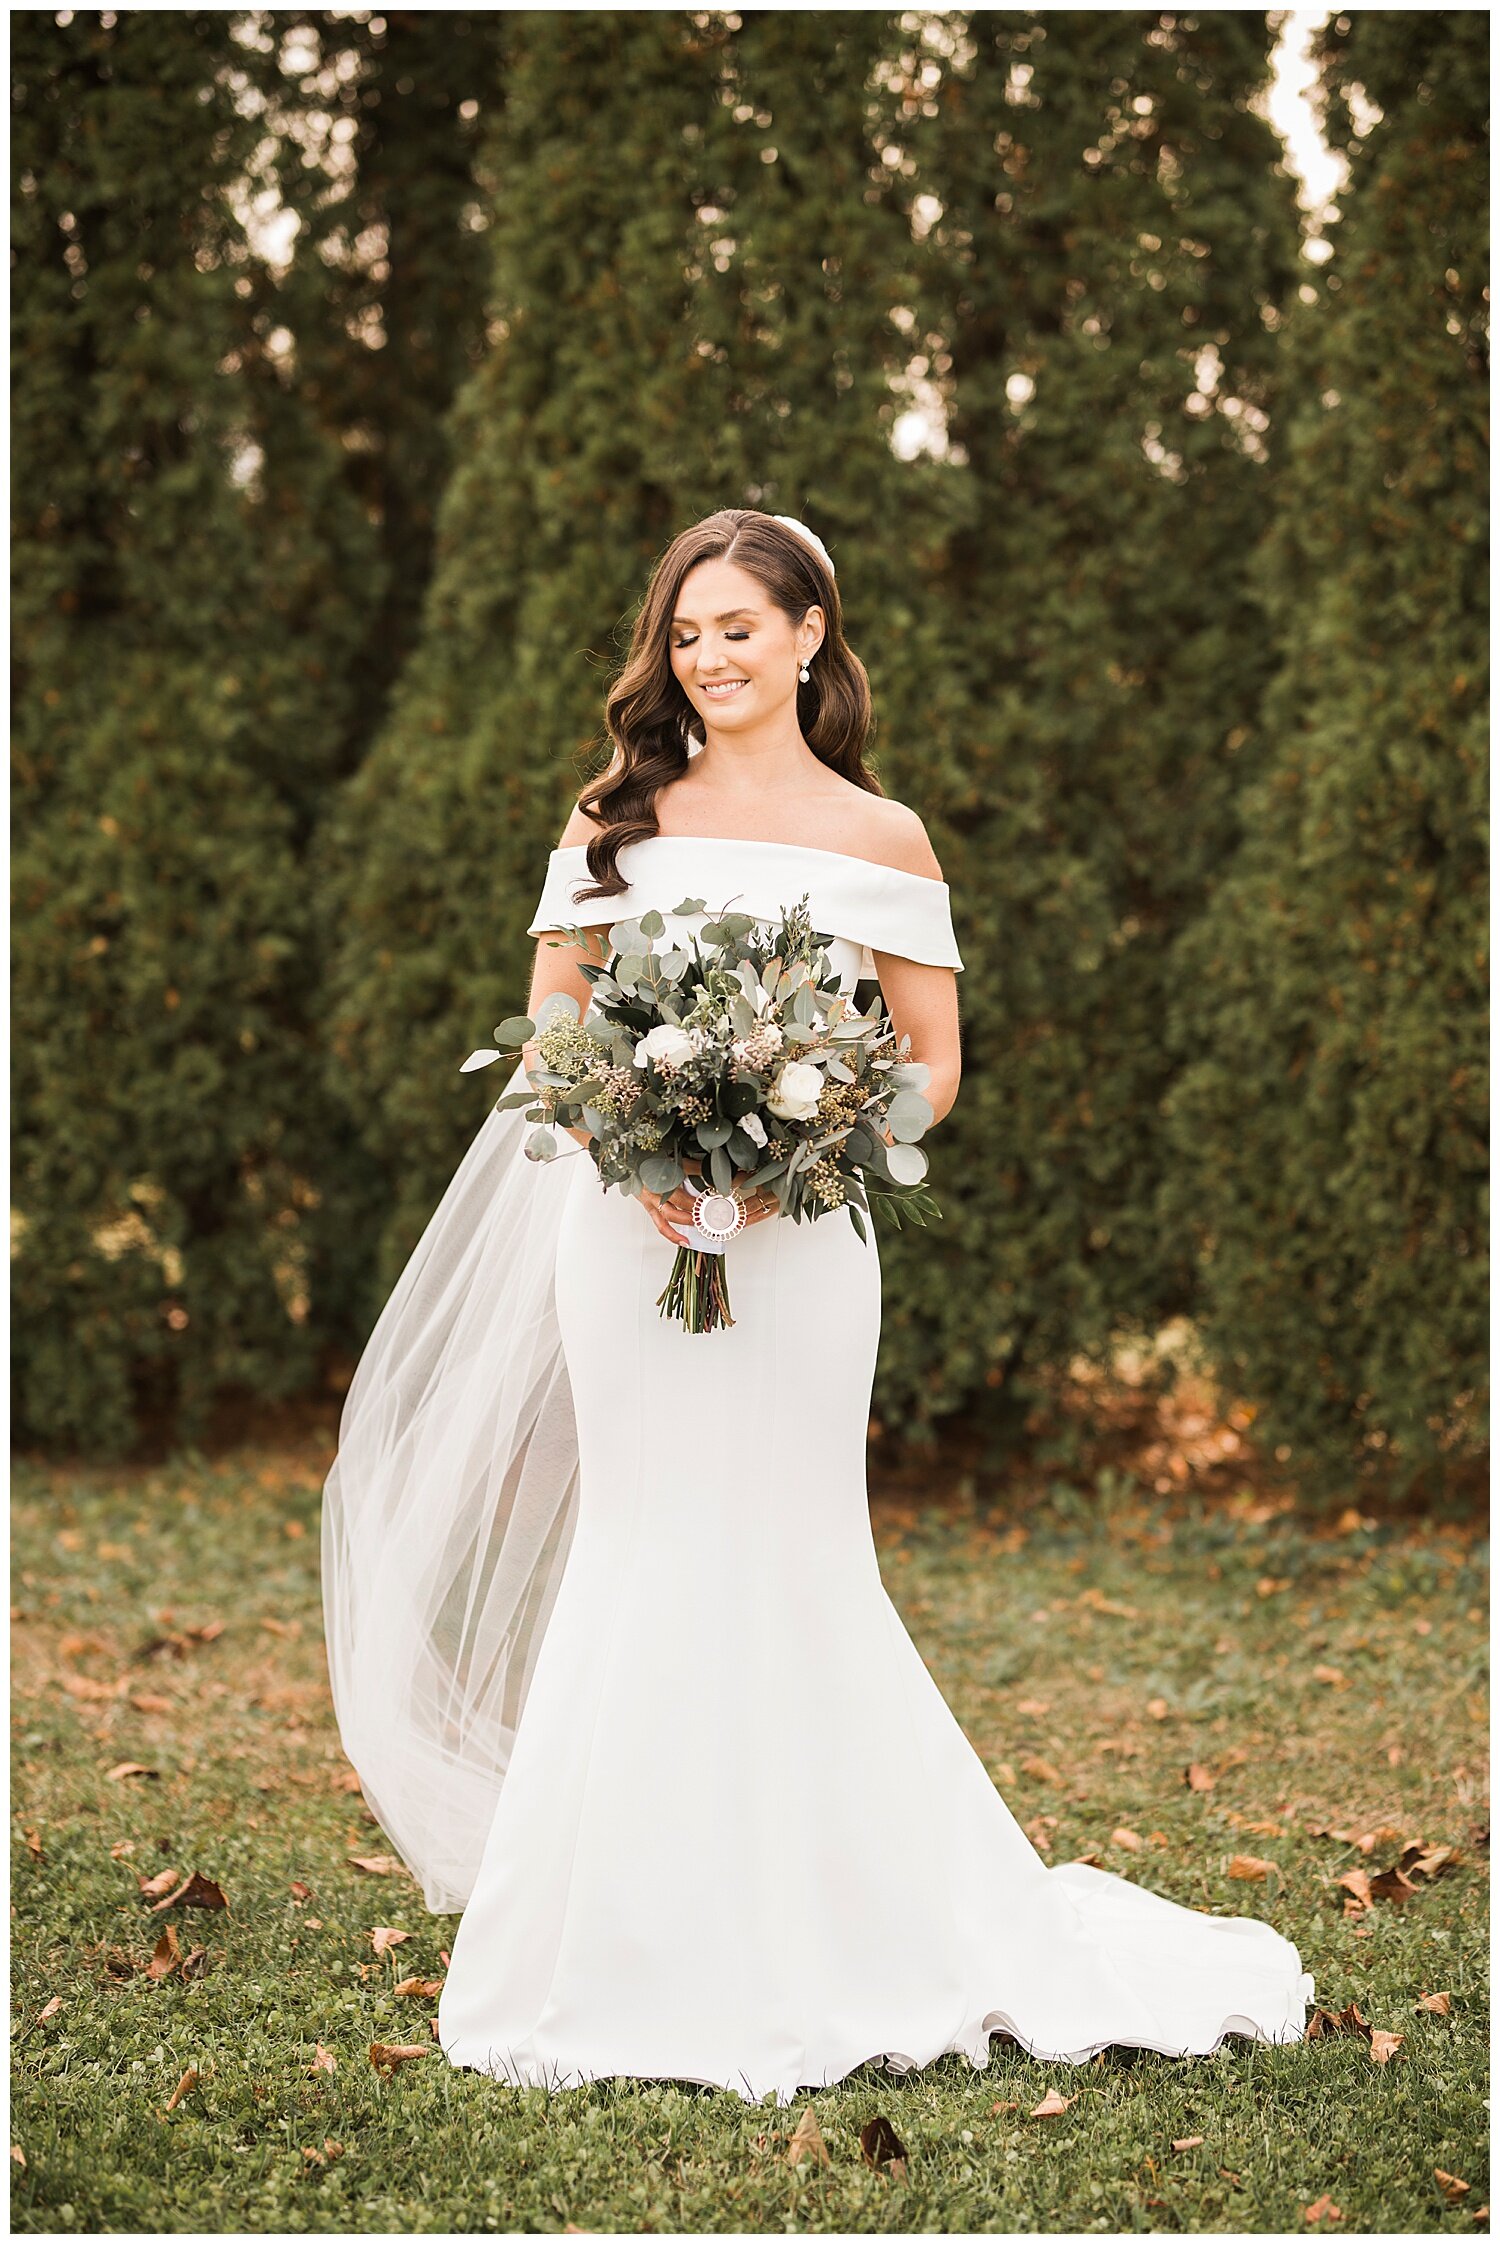 RGNY-Wedding-Photography-North-Fork-Vineyard-Apollo-Fields-029.jpg